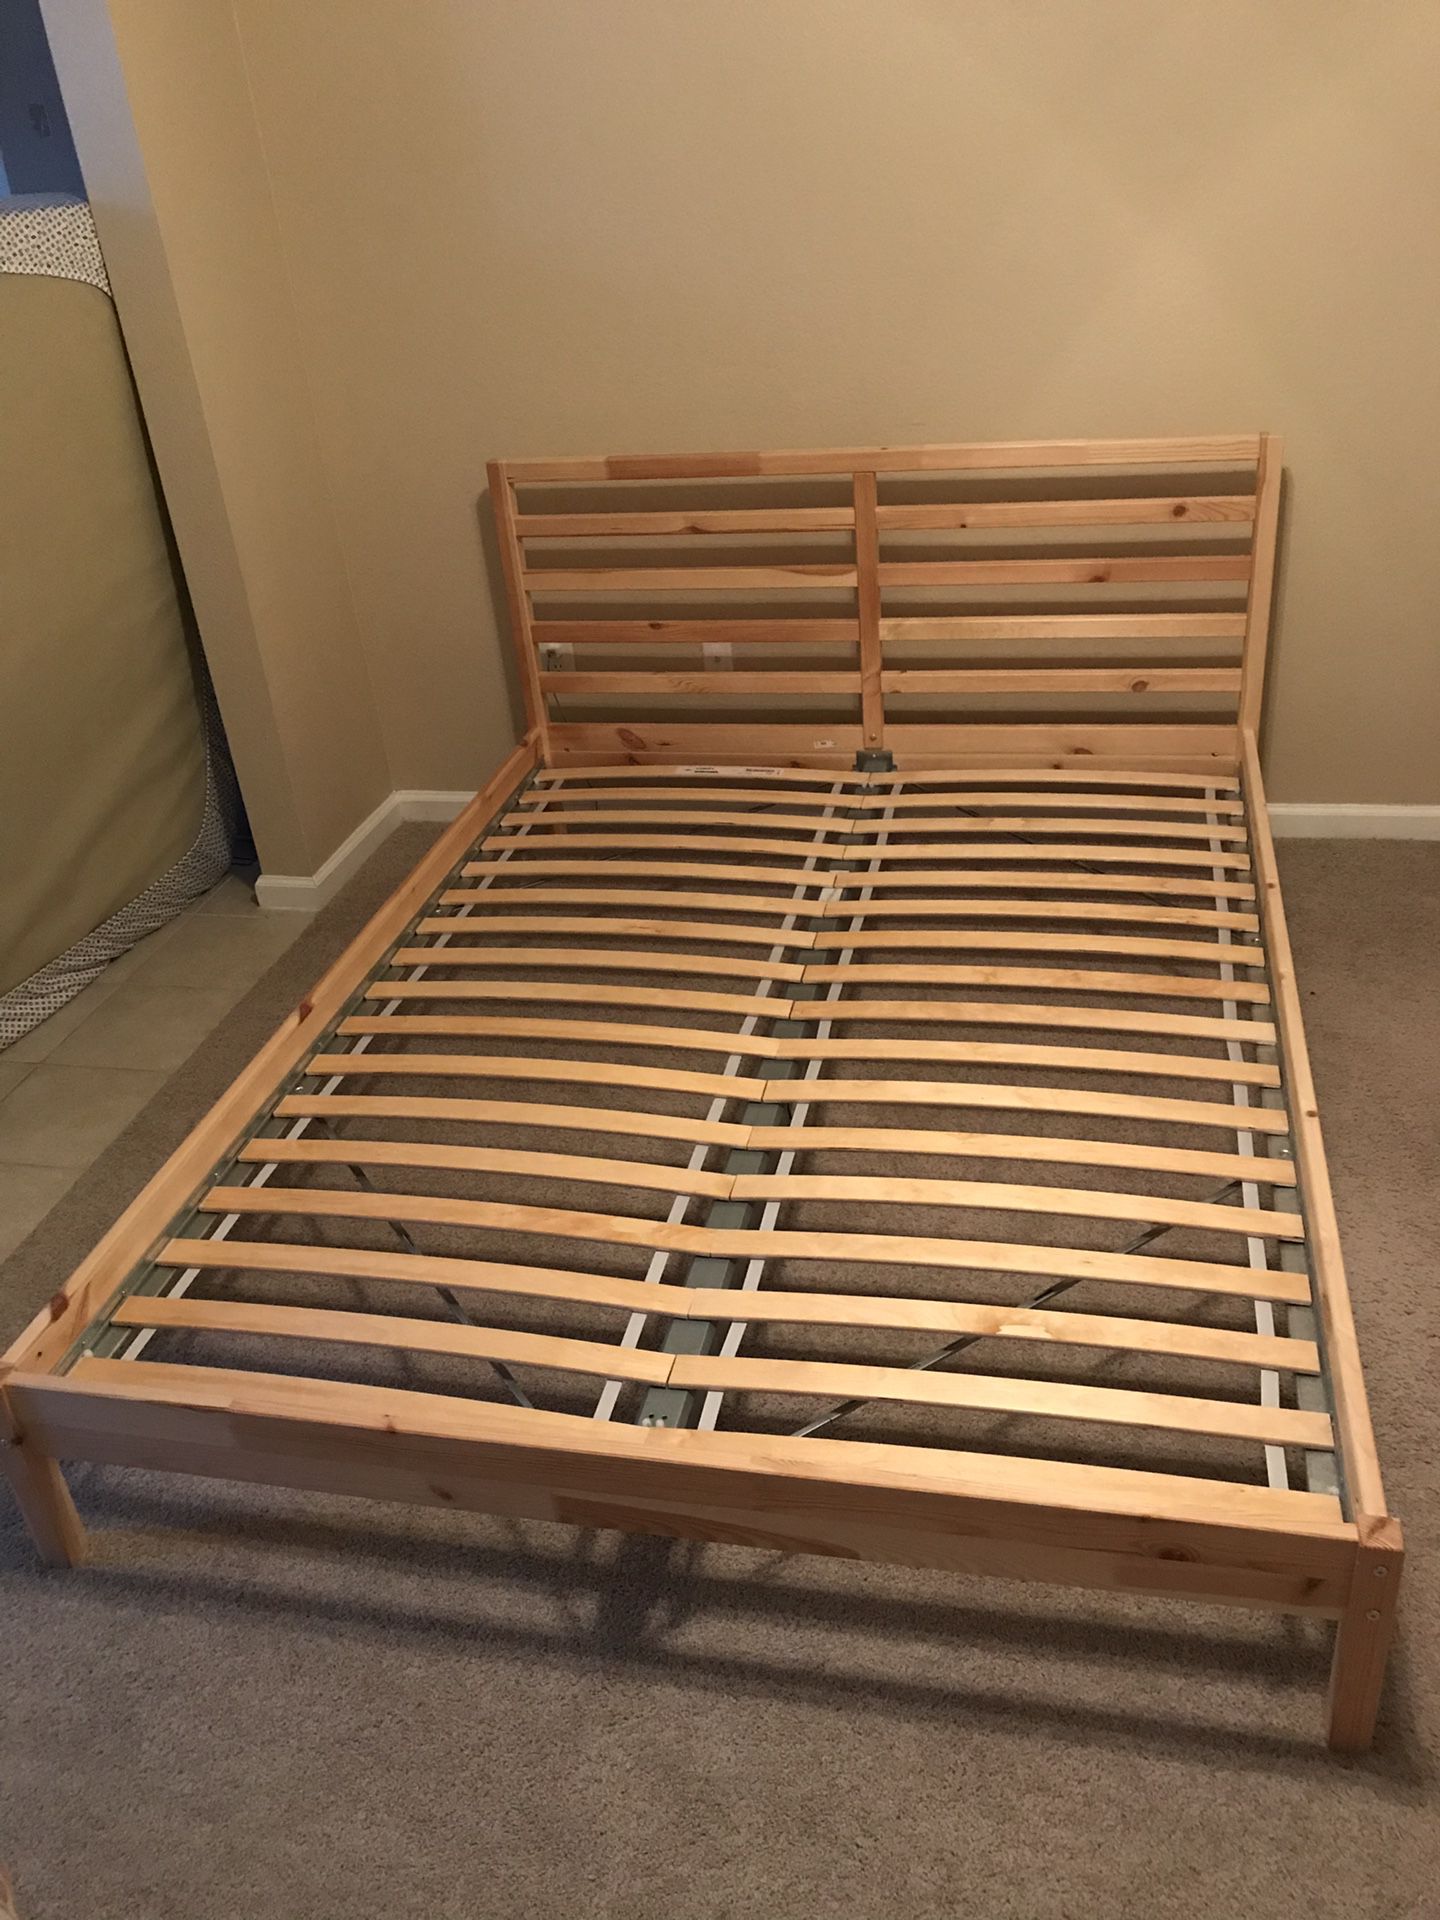 Ikea Tarva Queen Bed Frame For In, Bed Frame Orlando Florida